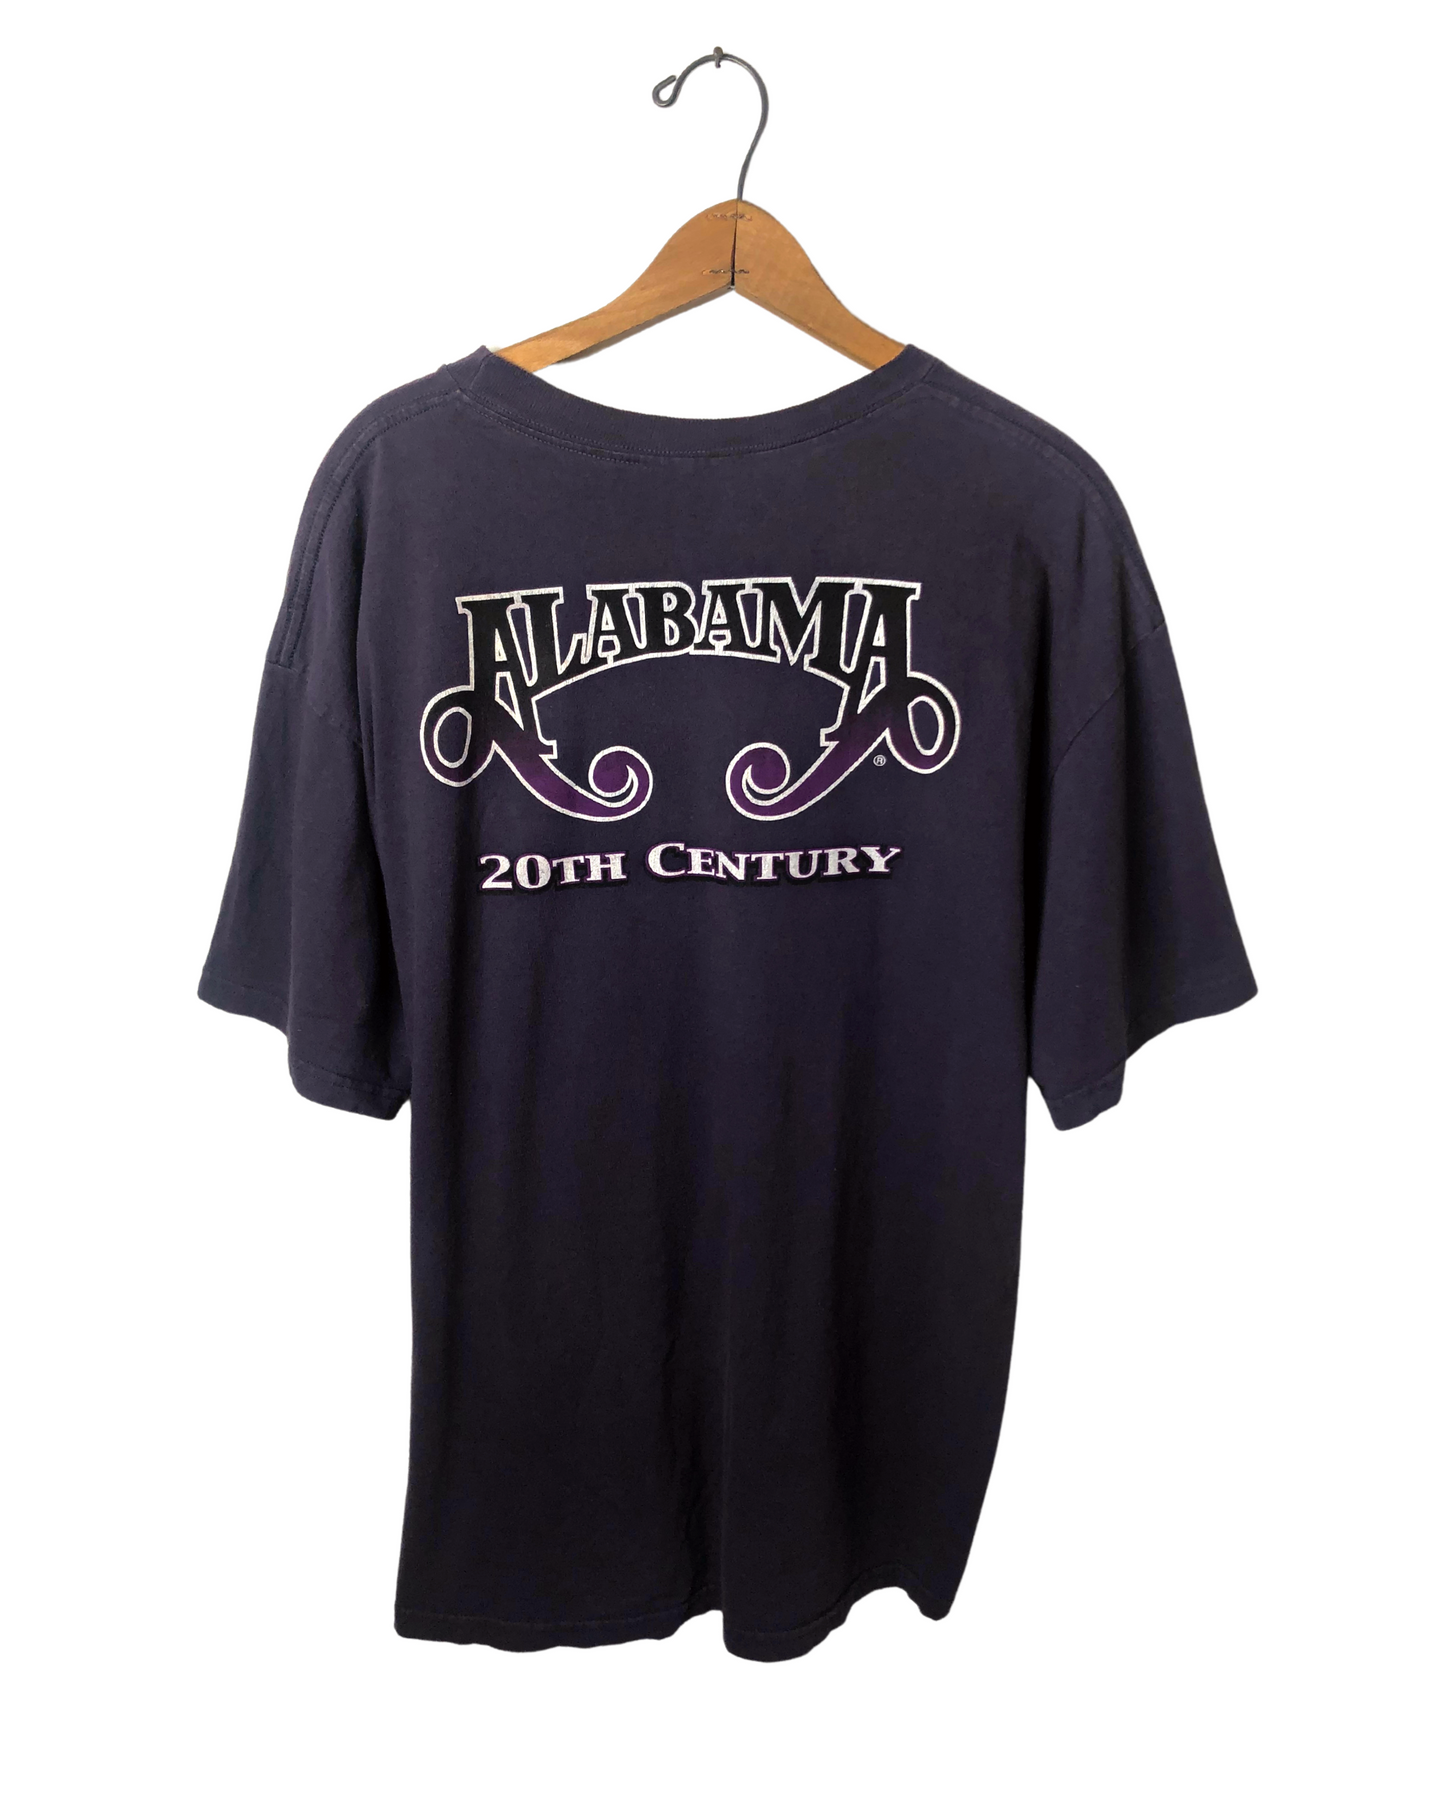 Vintage 1999 Alabama 20th Century Album Country Band Tshirt